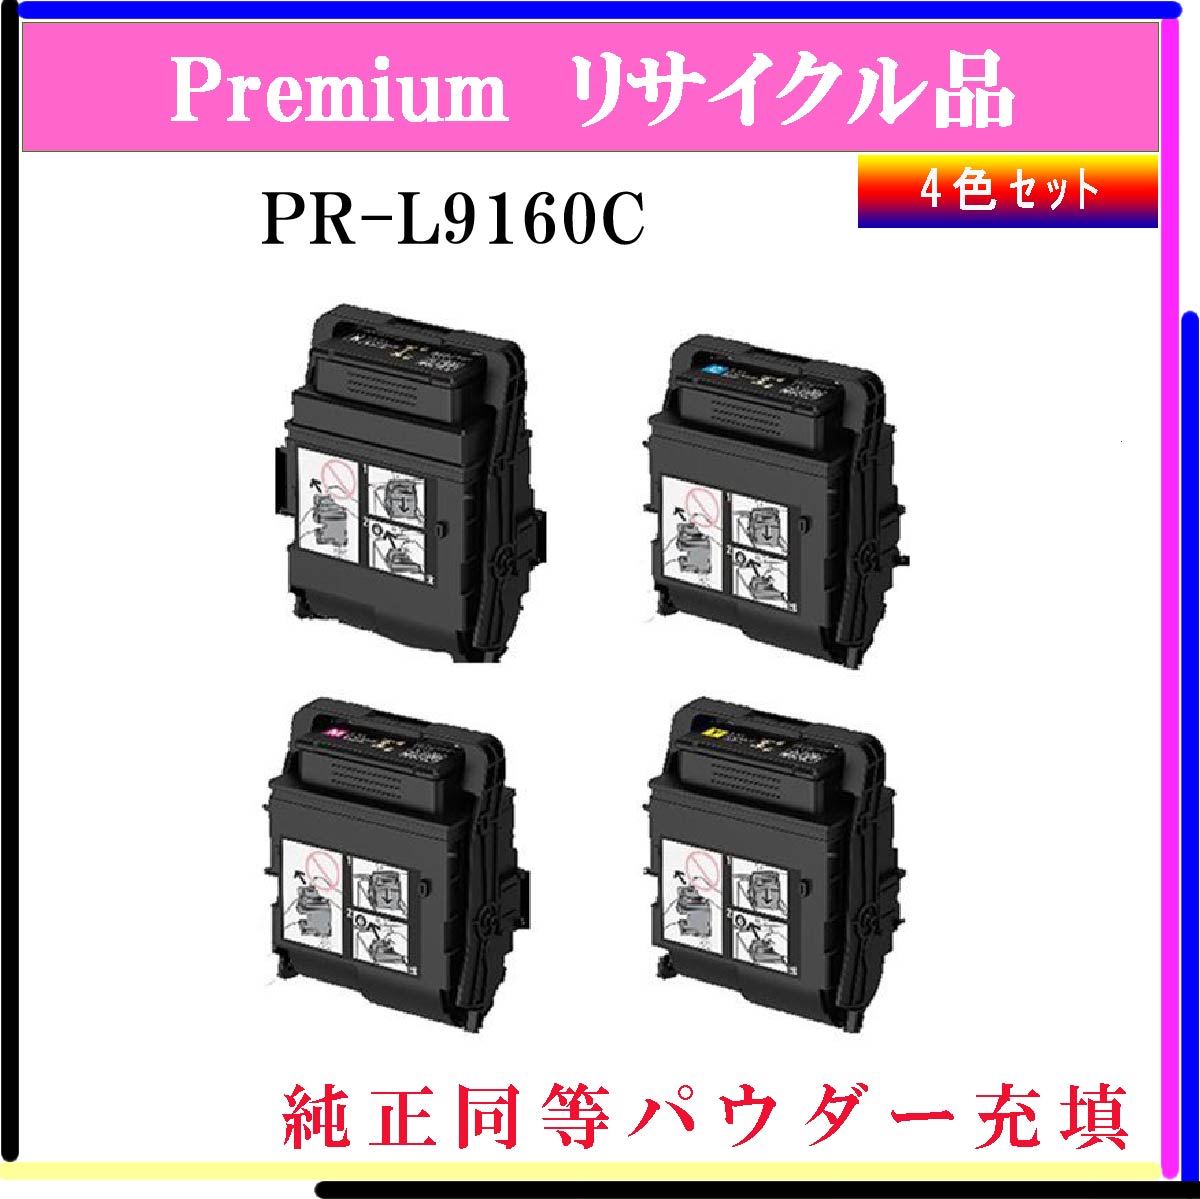 PR-L9160C (4色ｾｯﾄ) (純正同等ﾊﾟｳﾀﾞｰ)